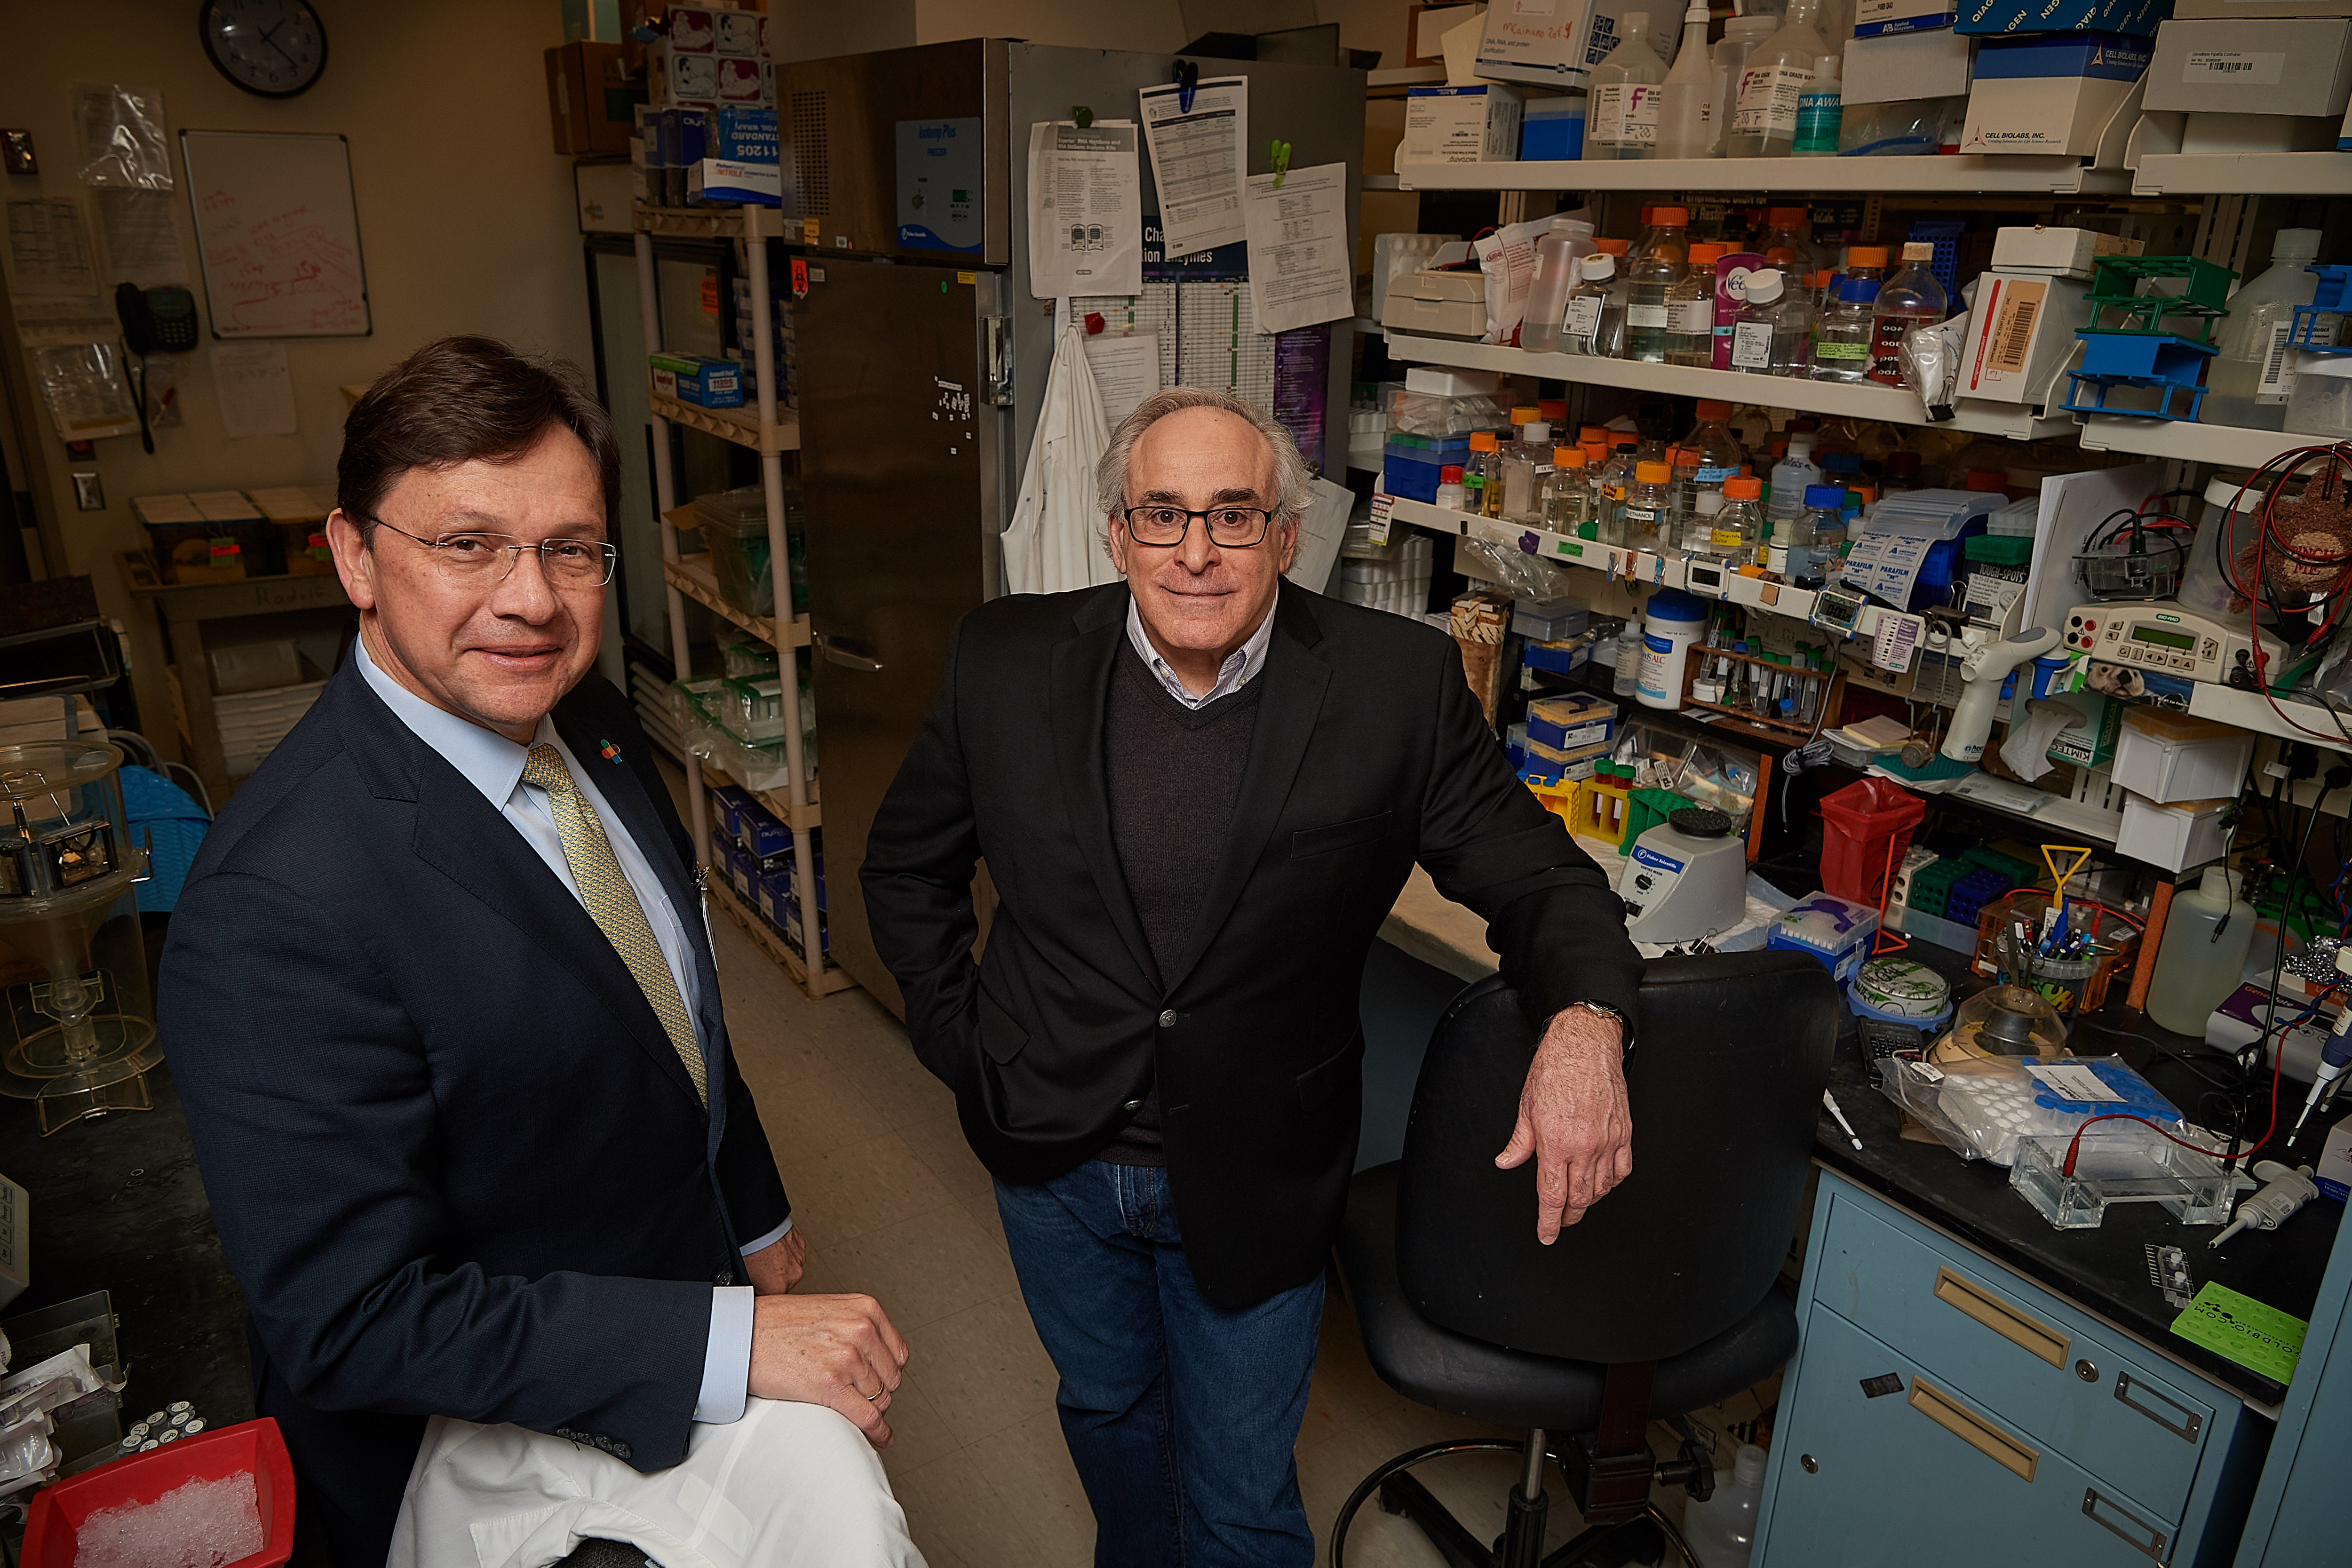 Juan Salazar, left, and Justin Radolf at Radolfs's lab at UConn Health in Farmington on March 7, 2019. (Peter Morenus/UConn Photo)